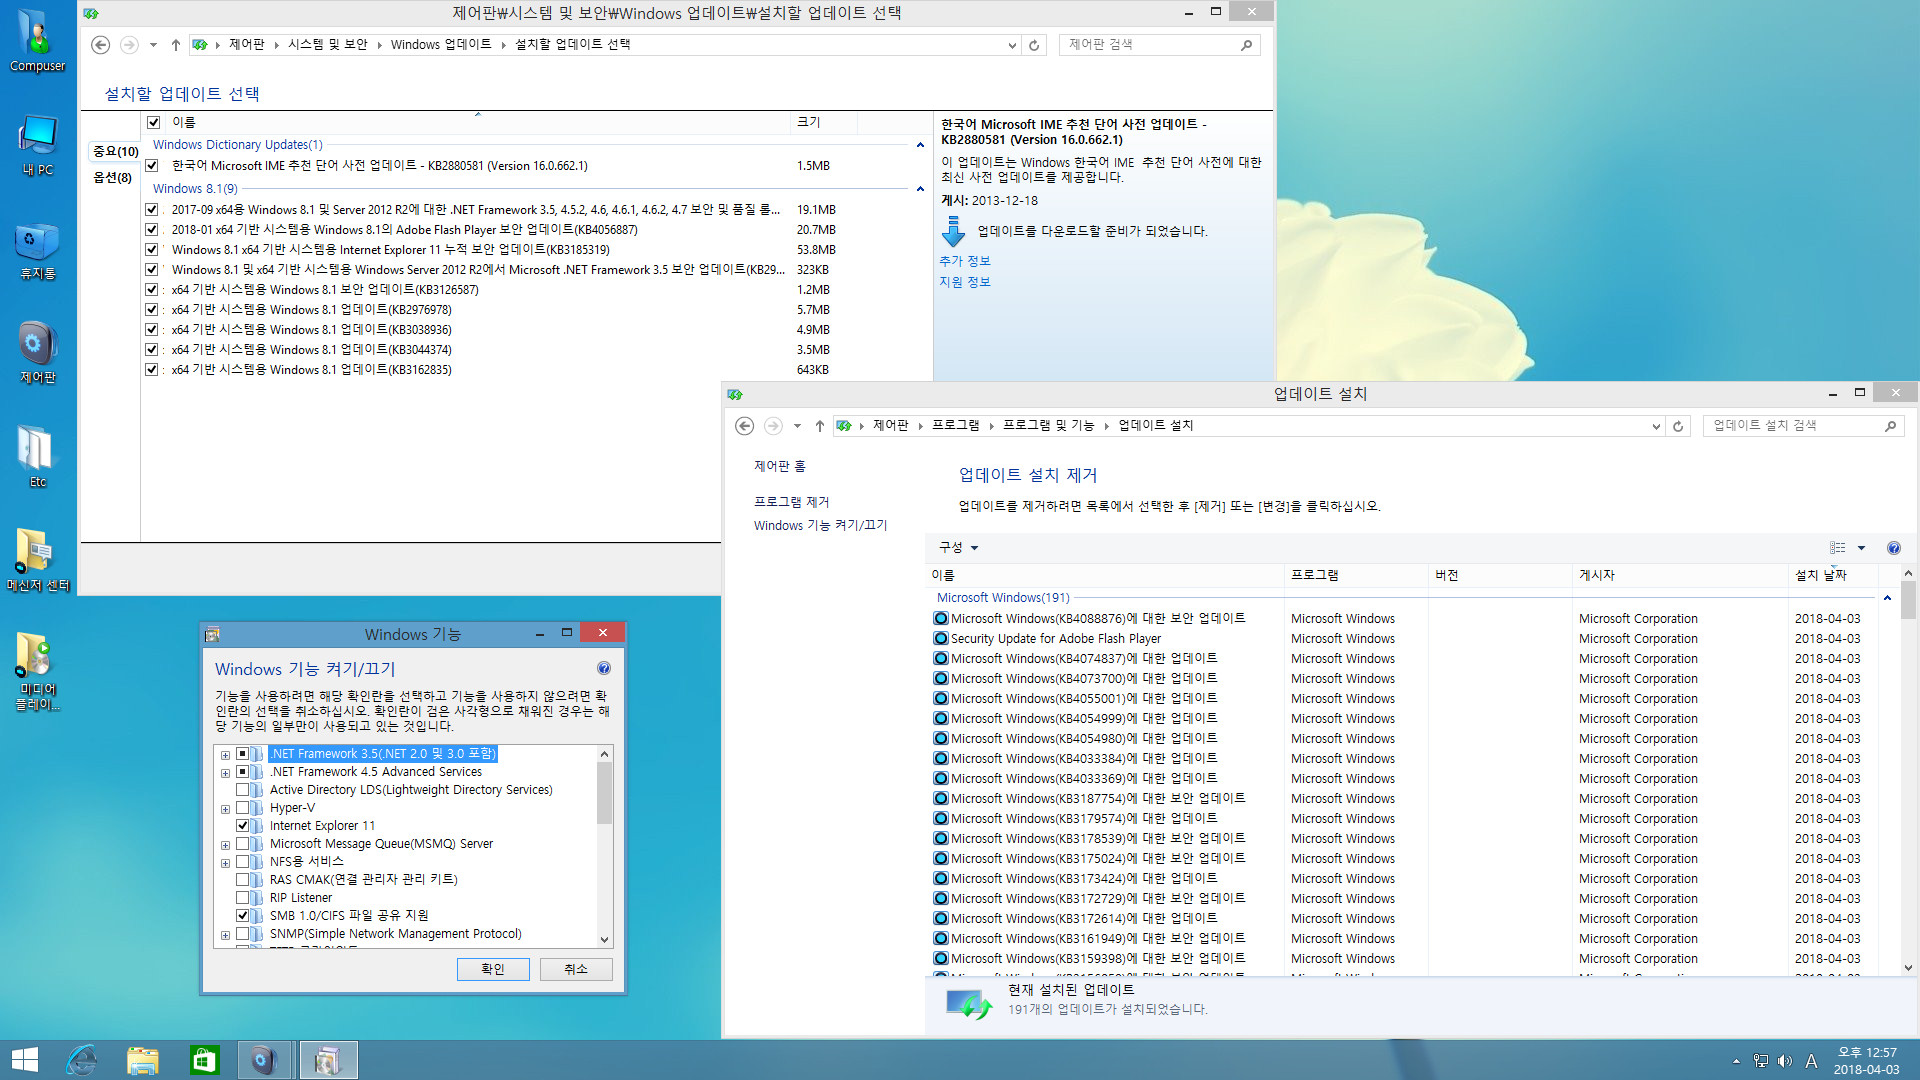 Windows 8.1 ky_0020-02.jpg